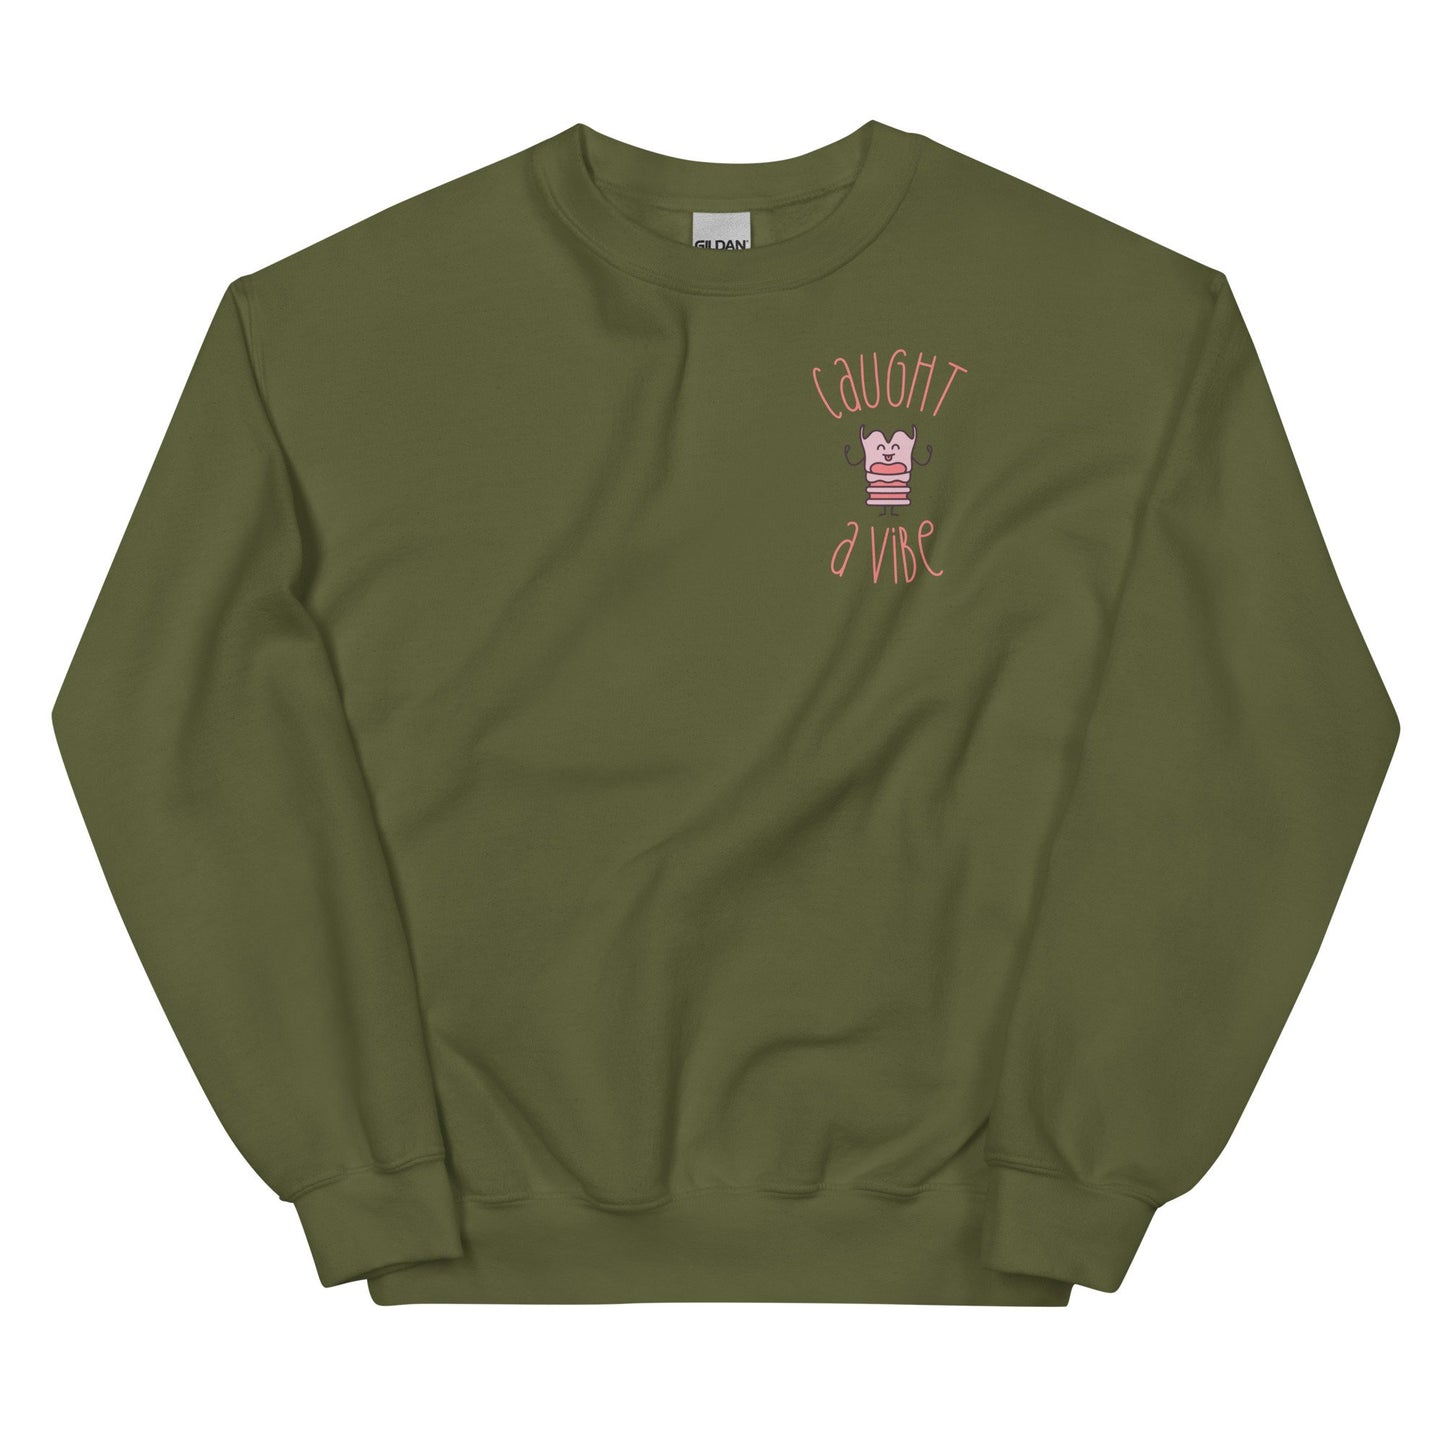 unisex-crew-neck-sweatshirt-military-green-front-63084ecd6c551.jpg